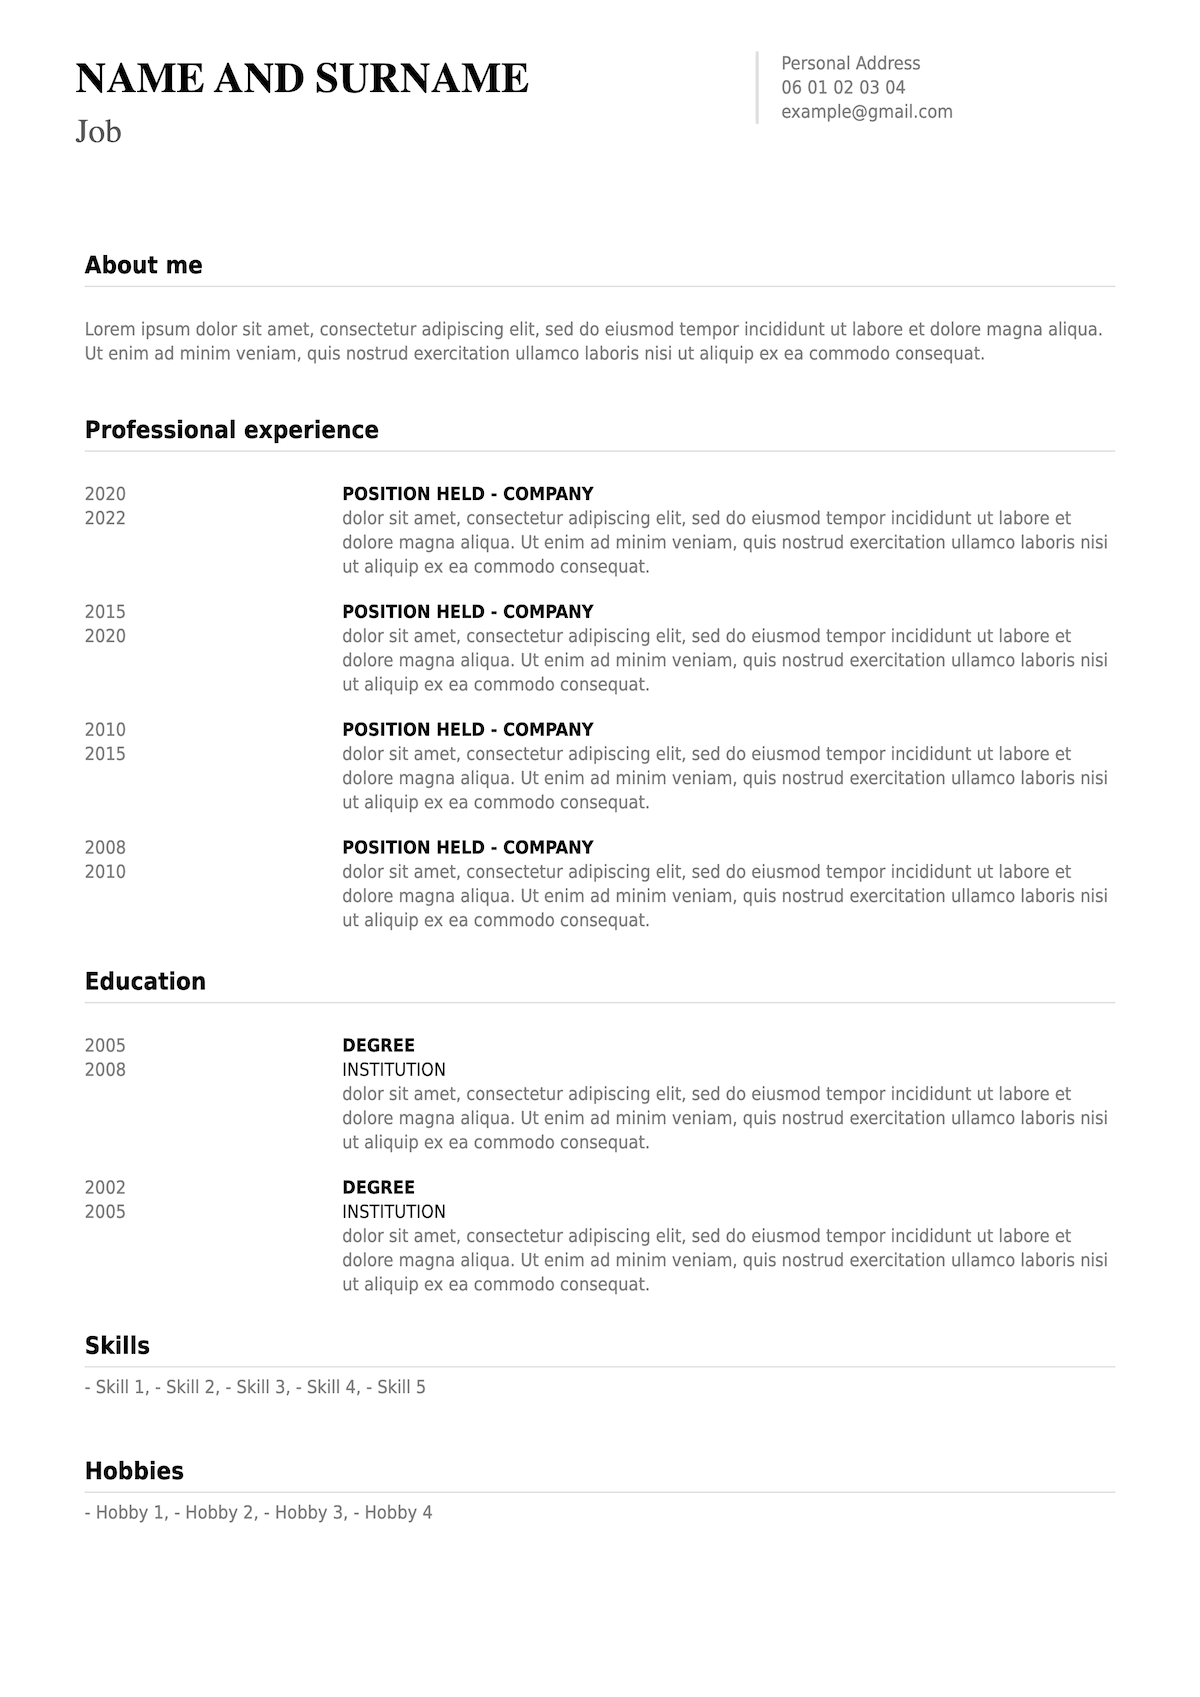 CV template career change